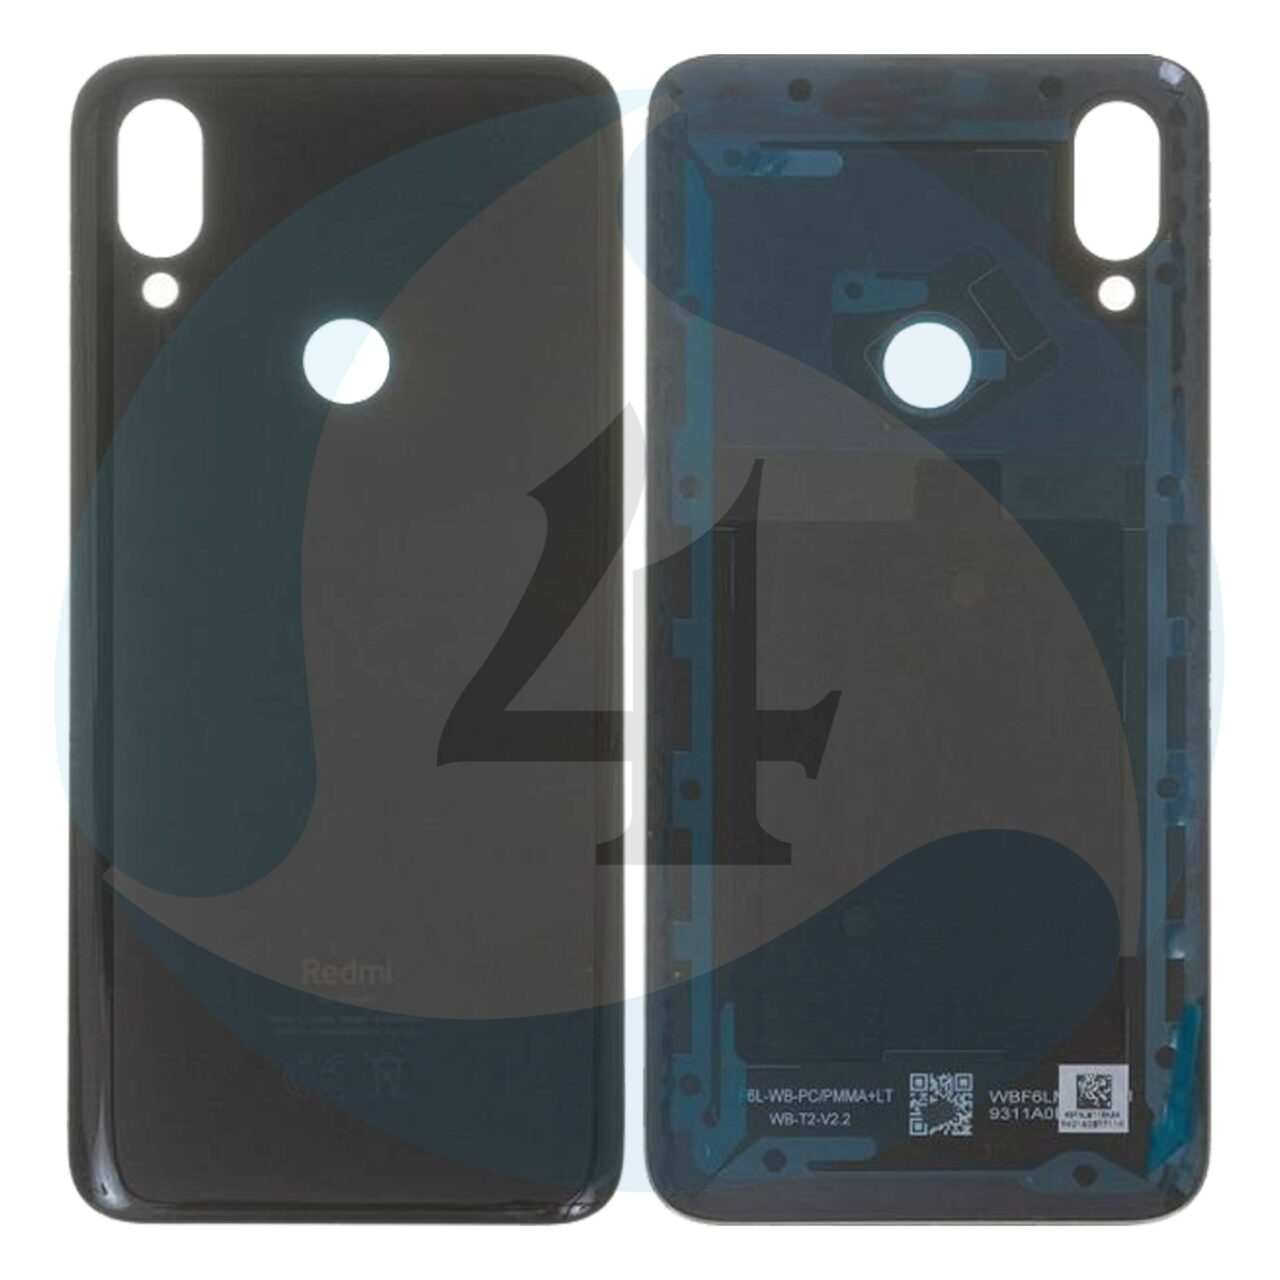 Backcover Black For Xiaomi Redmi 7 M1810 F6 L batterijcover